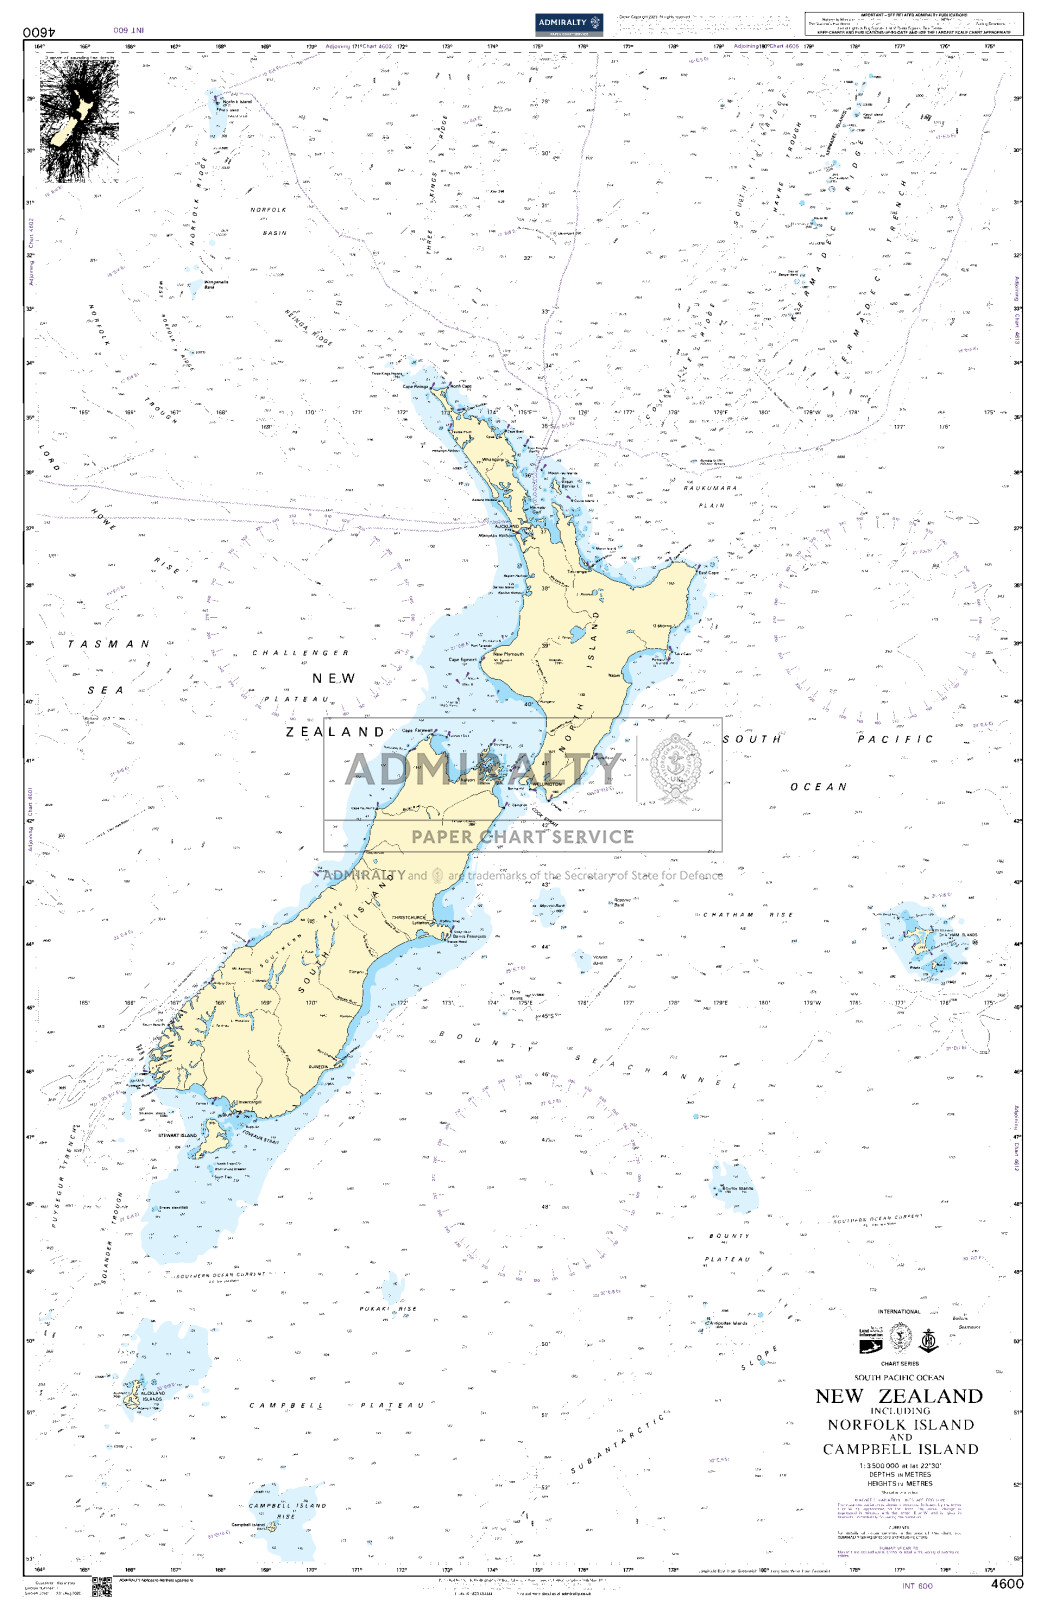 New Zealand including Norfolk Island and Campbell Island. UKHO4600